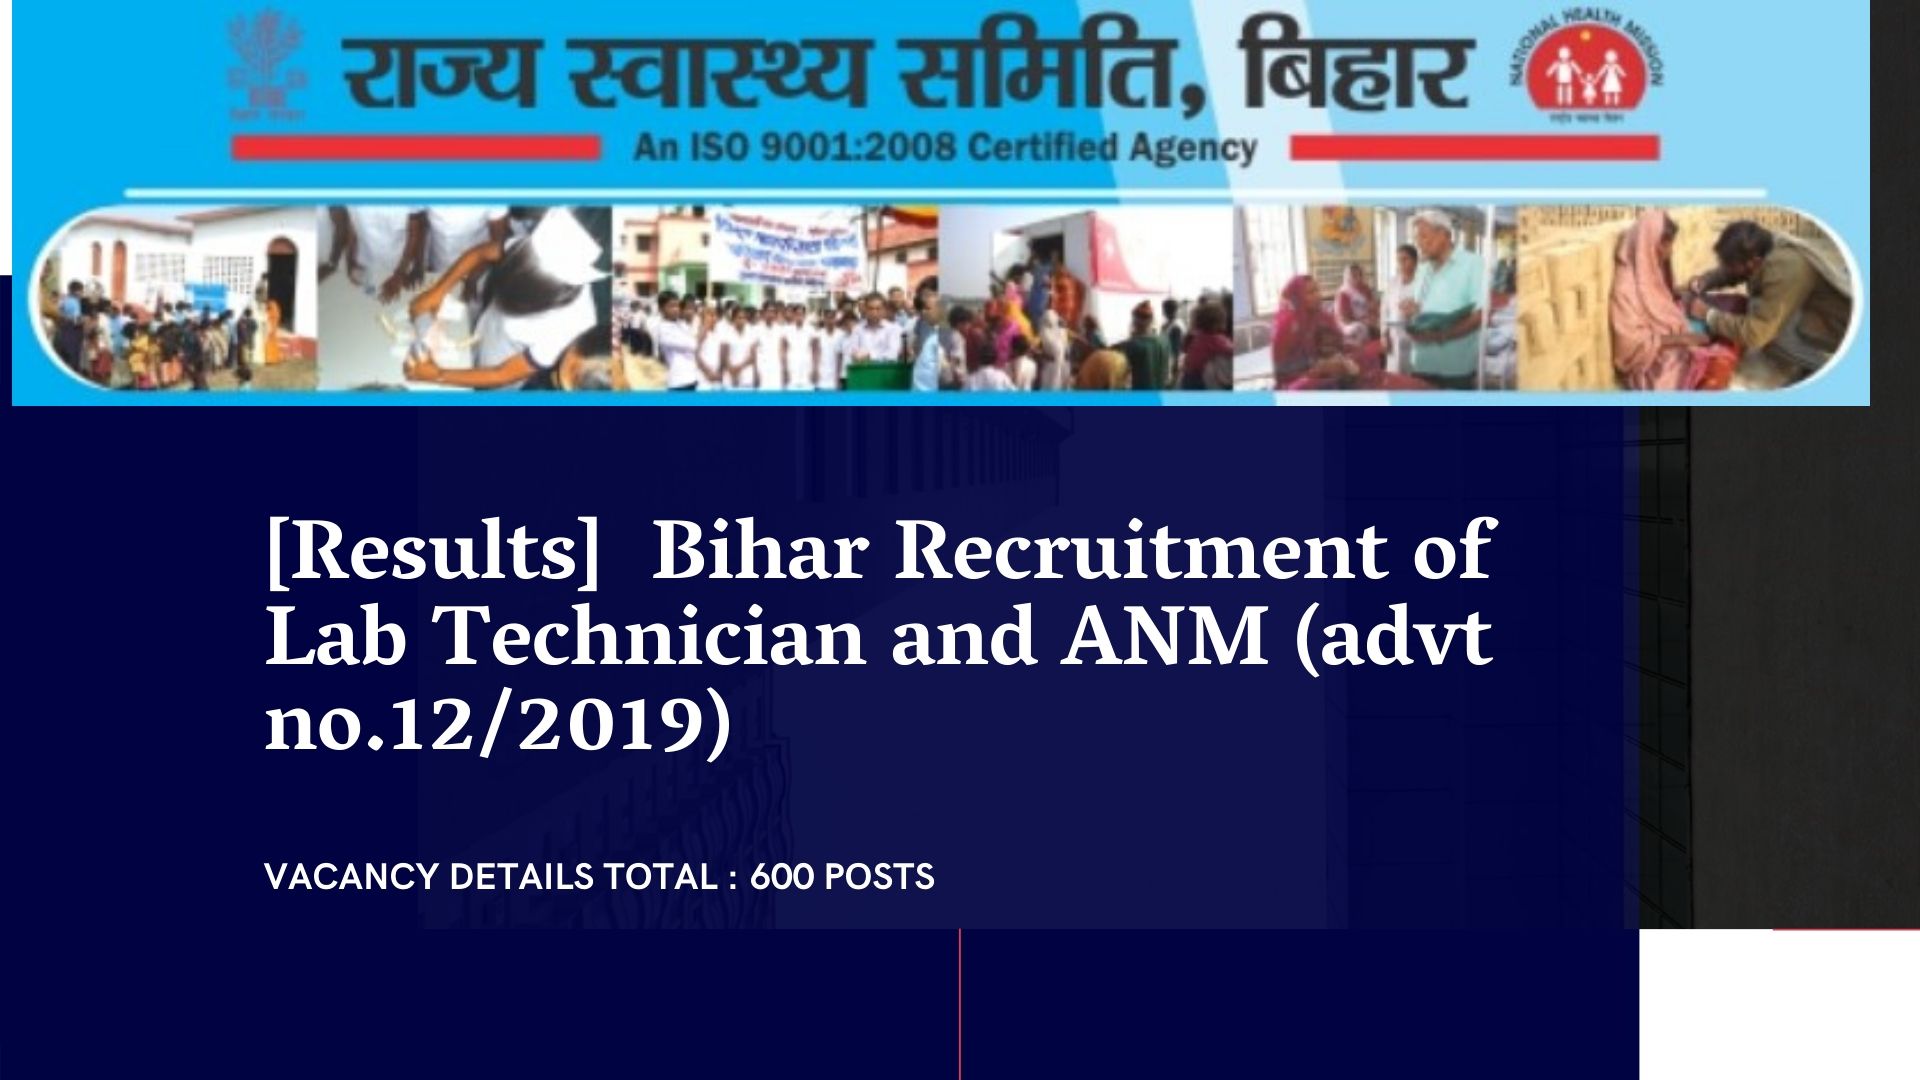 [Results] Bihar Recruitment of Lab Technician and ANM (advt no.12_2019)